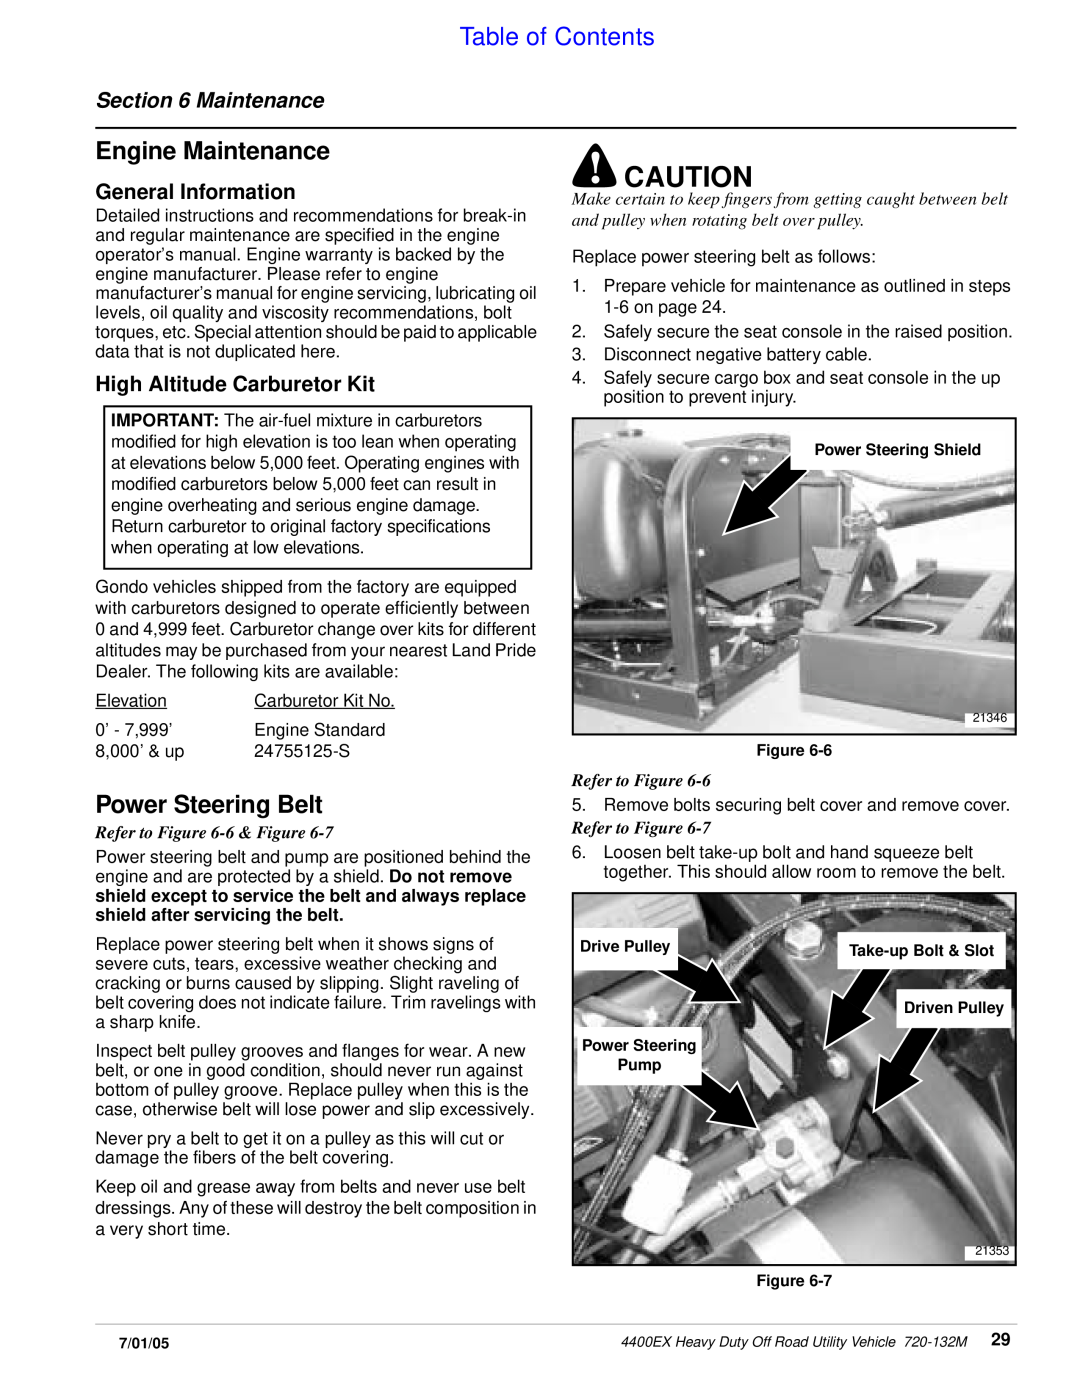 Land Pride 22076, 720-132M manual Engine Maintenance, Power Steering Belt, General Information, High Altitude Carburetor Kit 